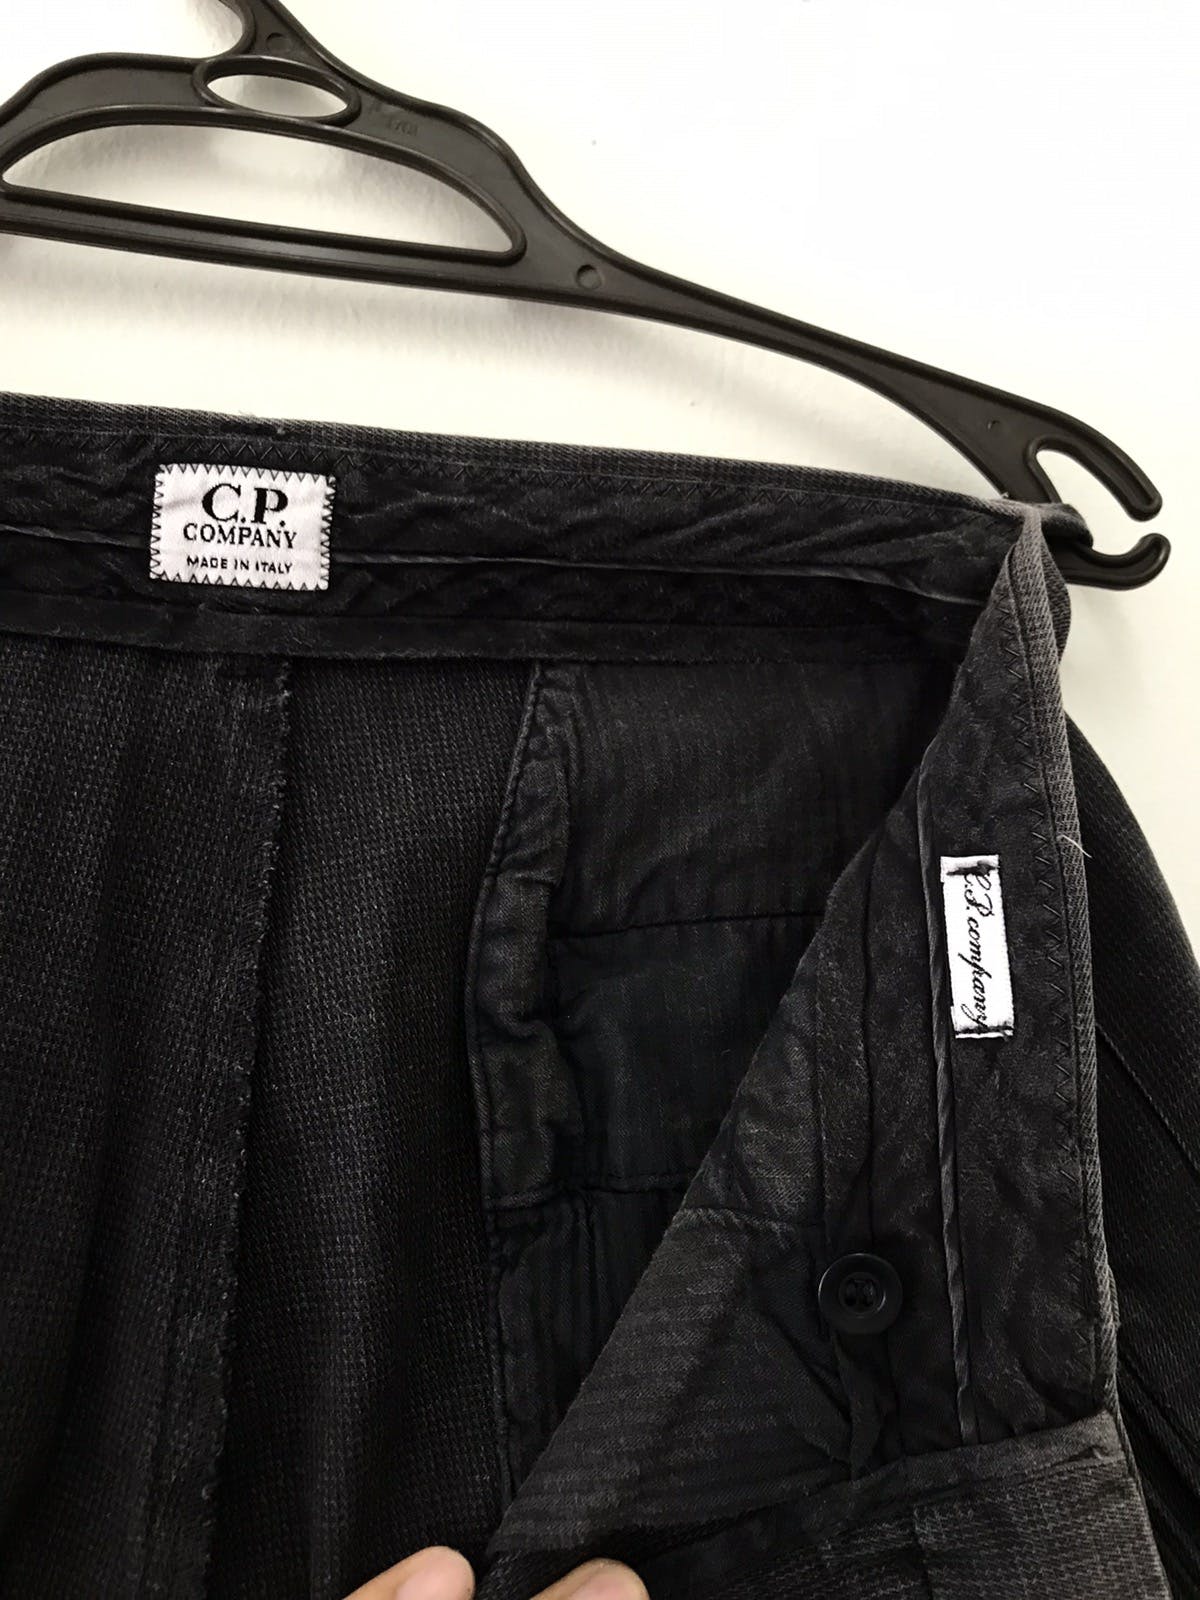 Vintage C.p.company pants - 14